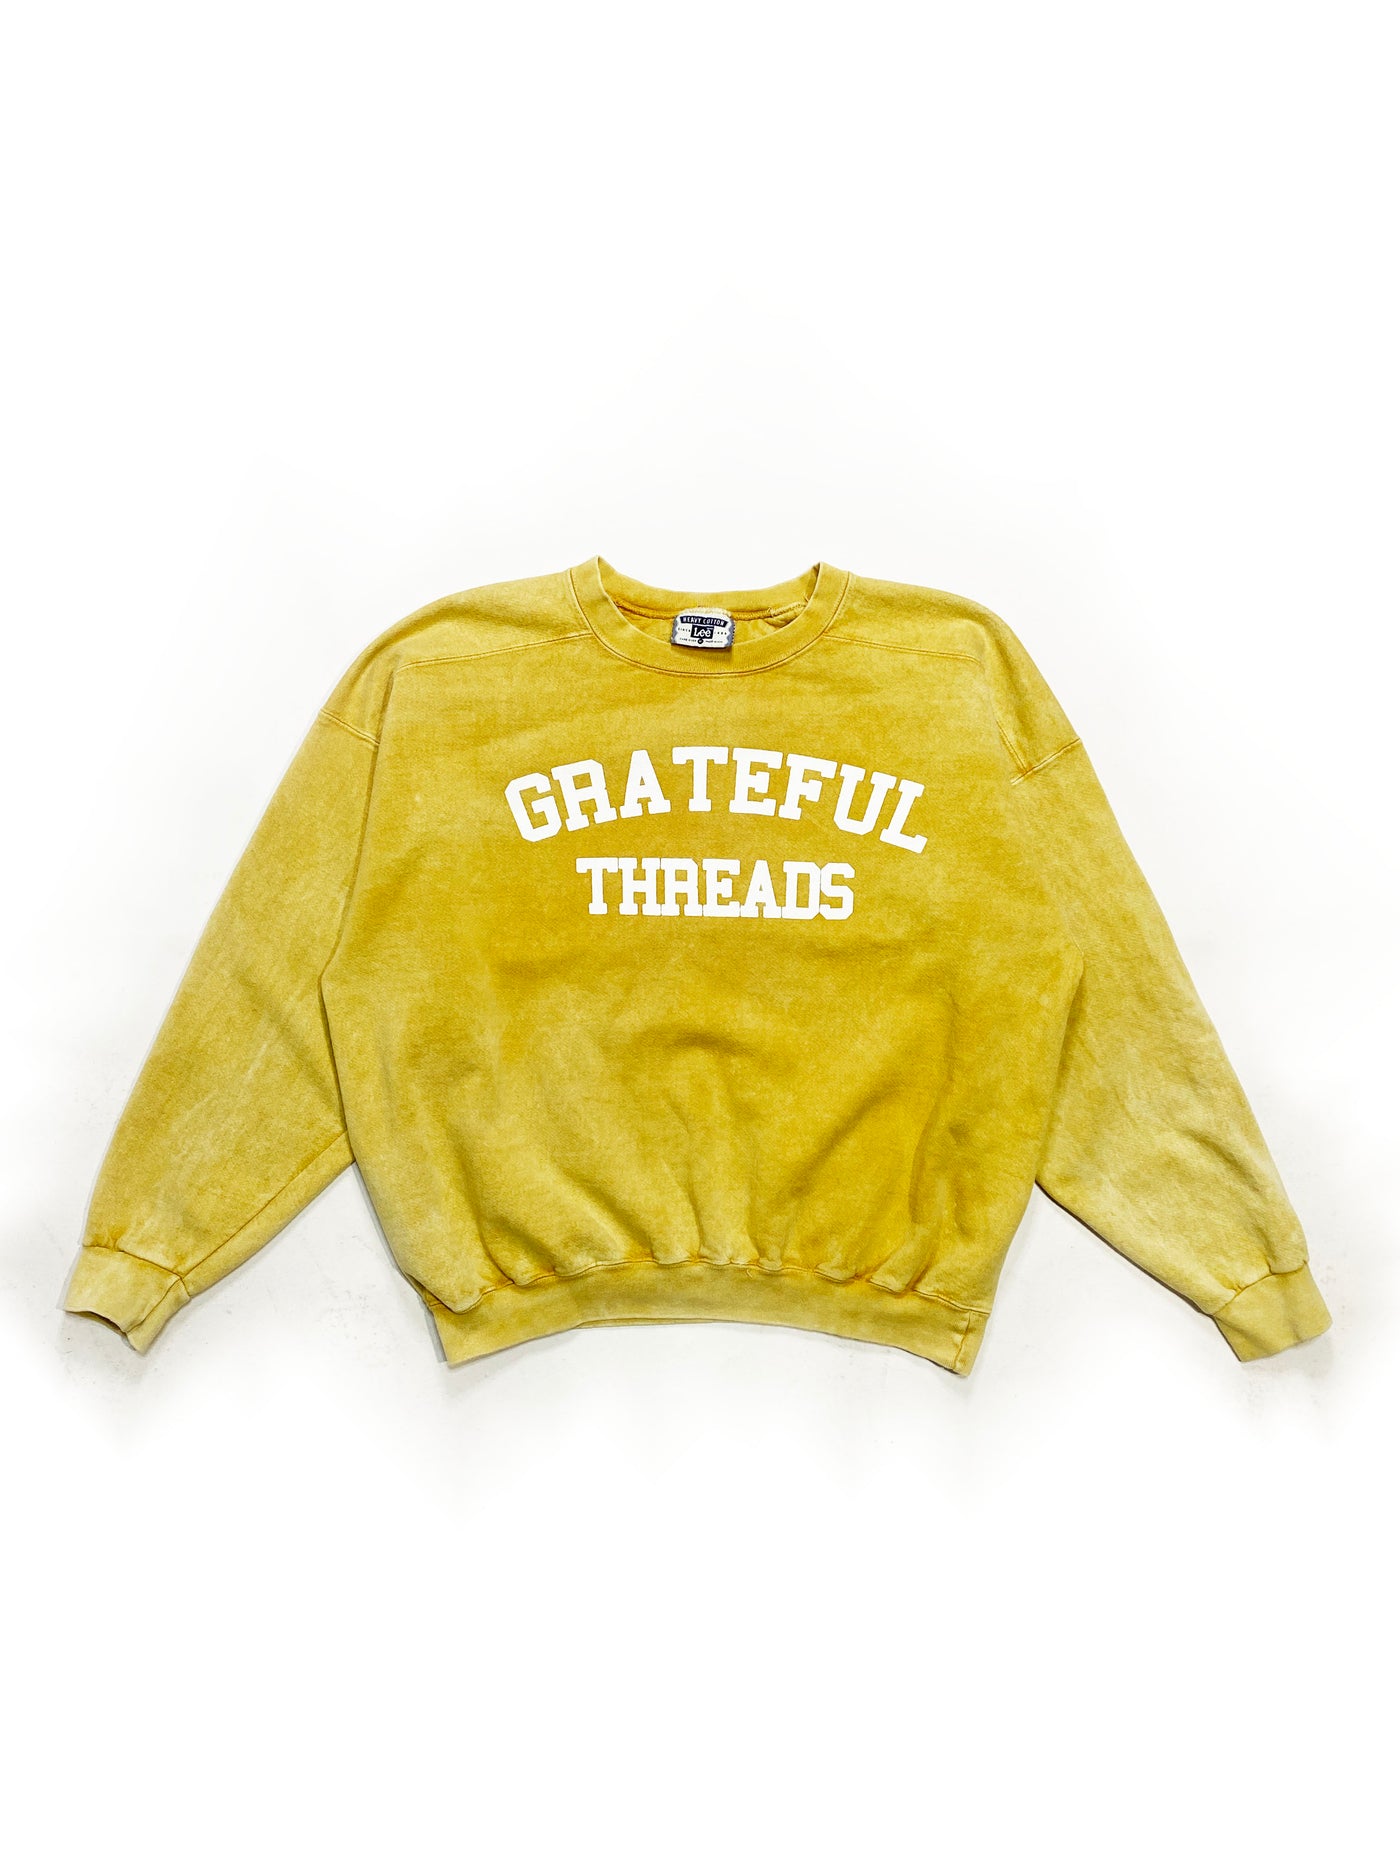 90s Lee Heavy Grateful Threads Spellout Crewneck - Light Yellow - Size L